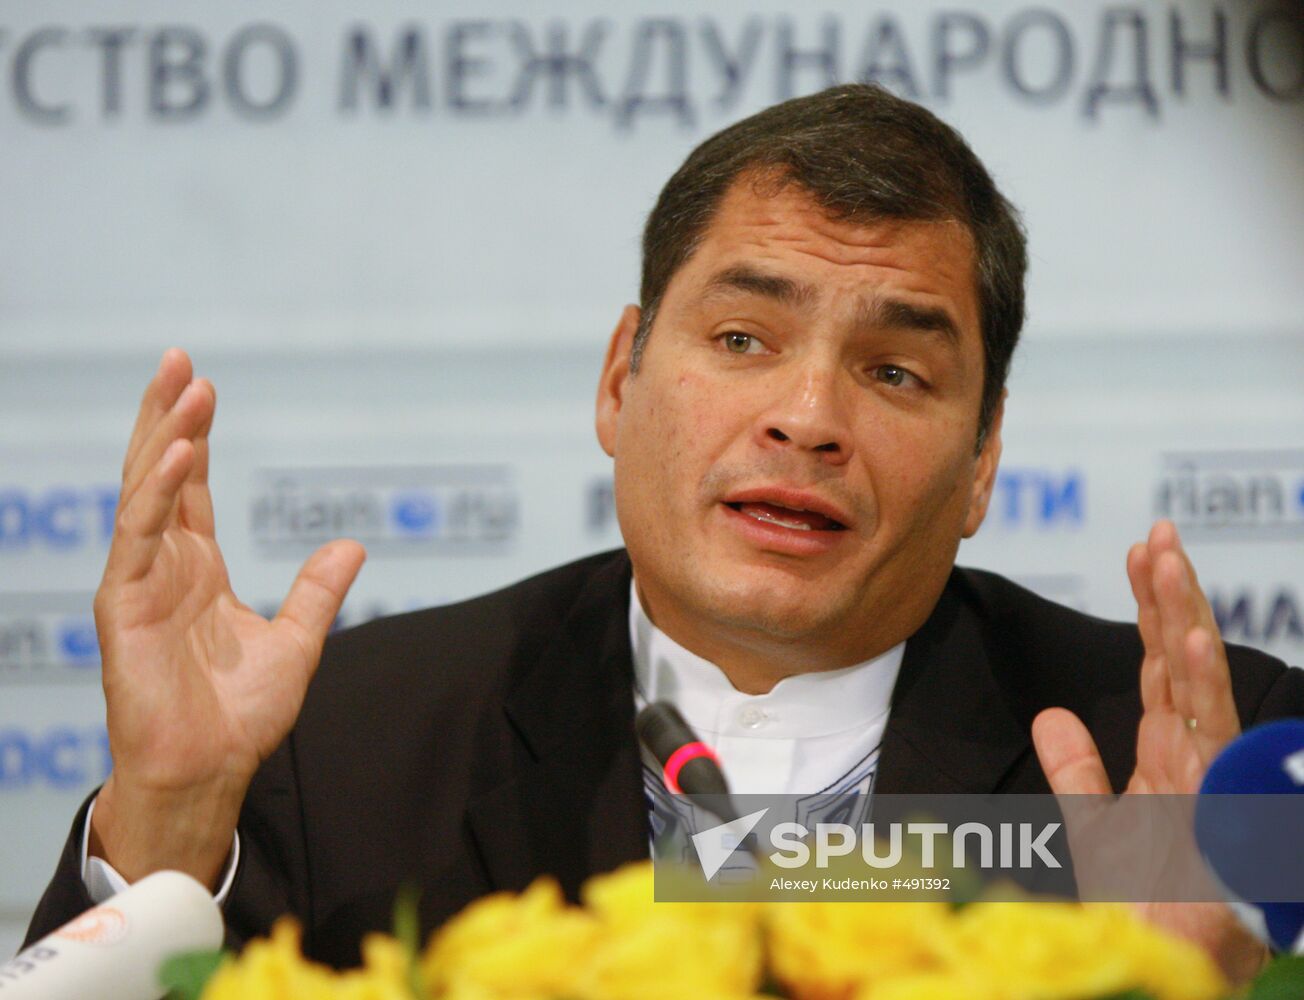 Ecuador's President Rafael Correa at press conference